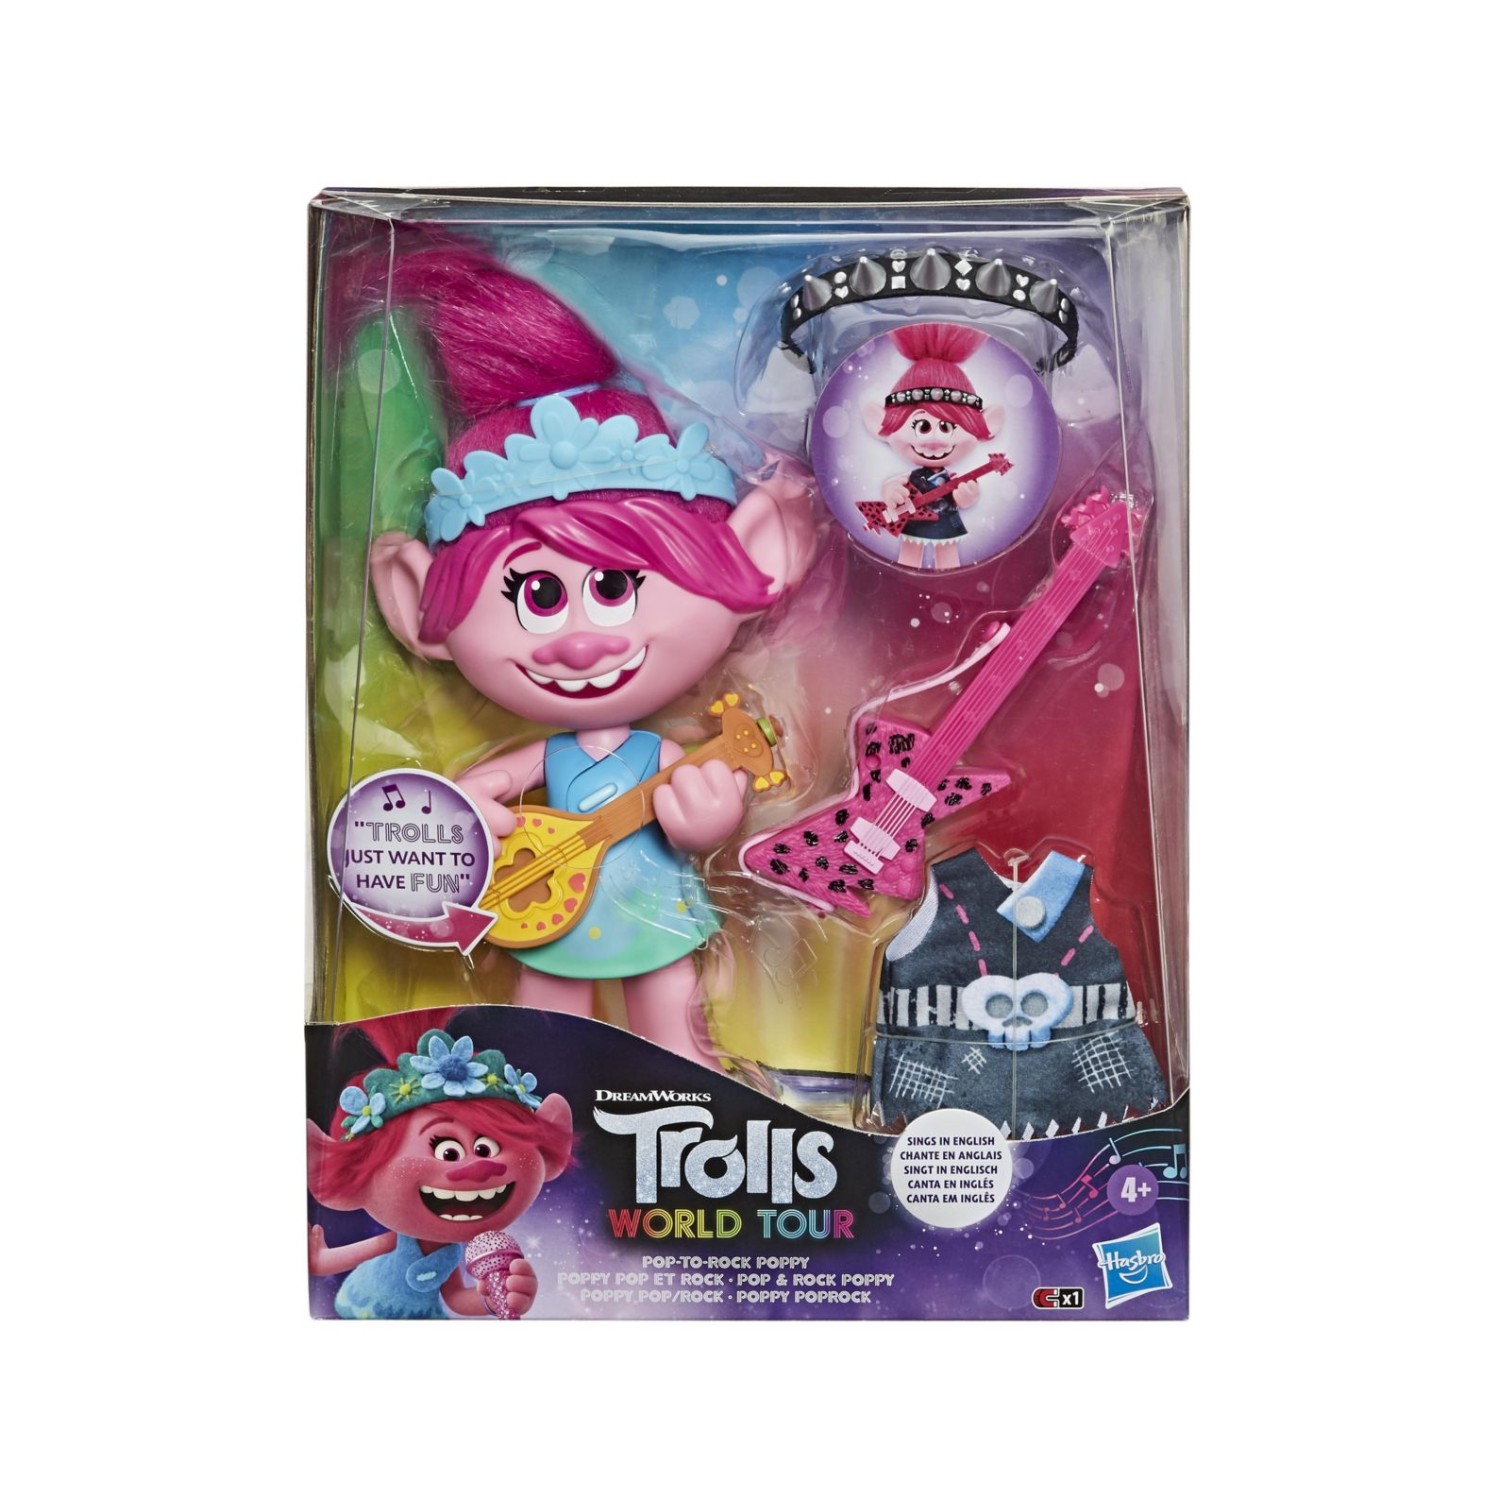 Trolls DreamWorks World Tour Pop-to-Rock Poppy Singing Doll with 2 ...